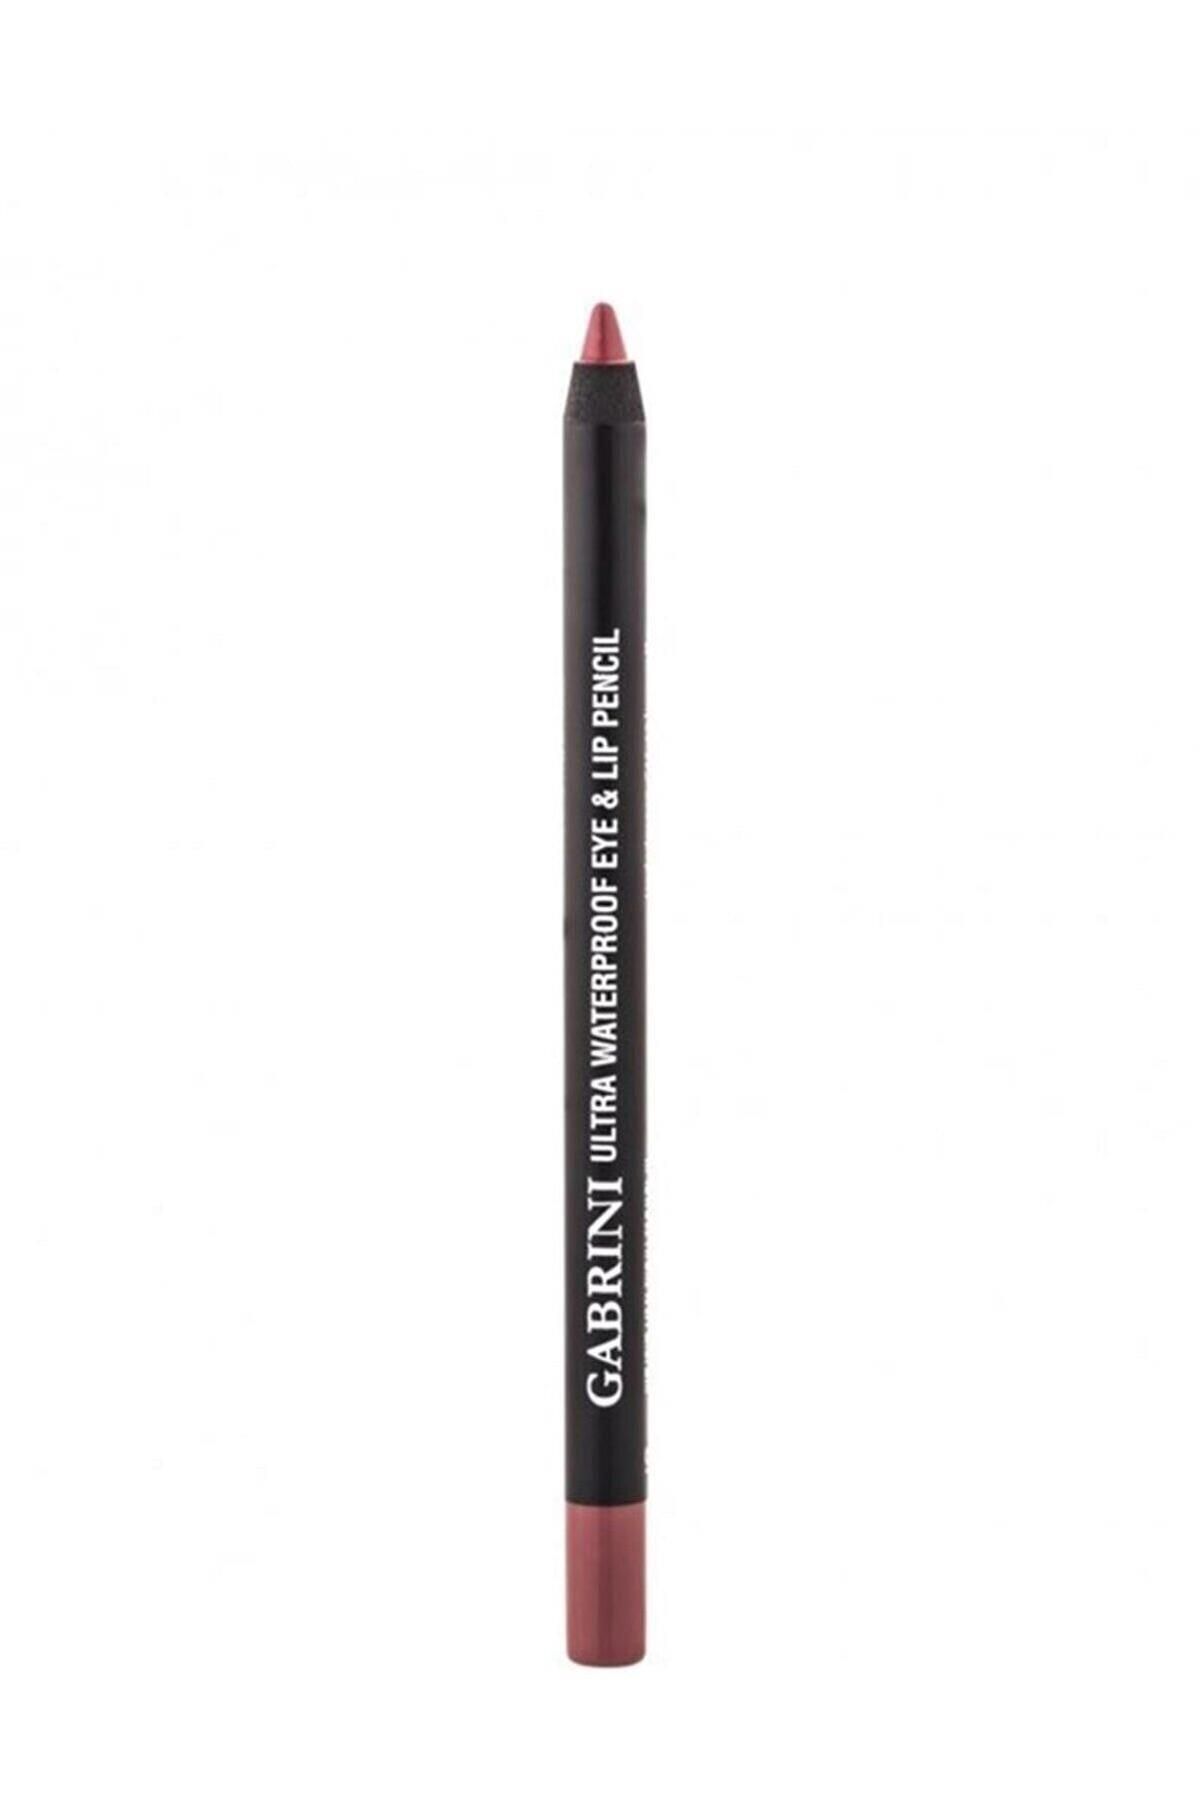 Gabrini Ultra Waterproof Eye & Lip Pencil 05